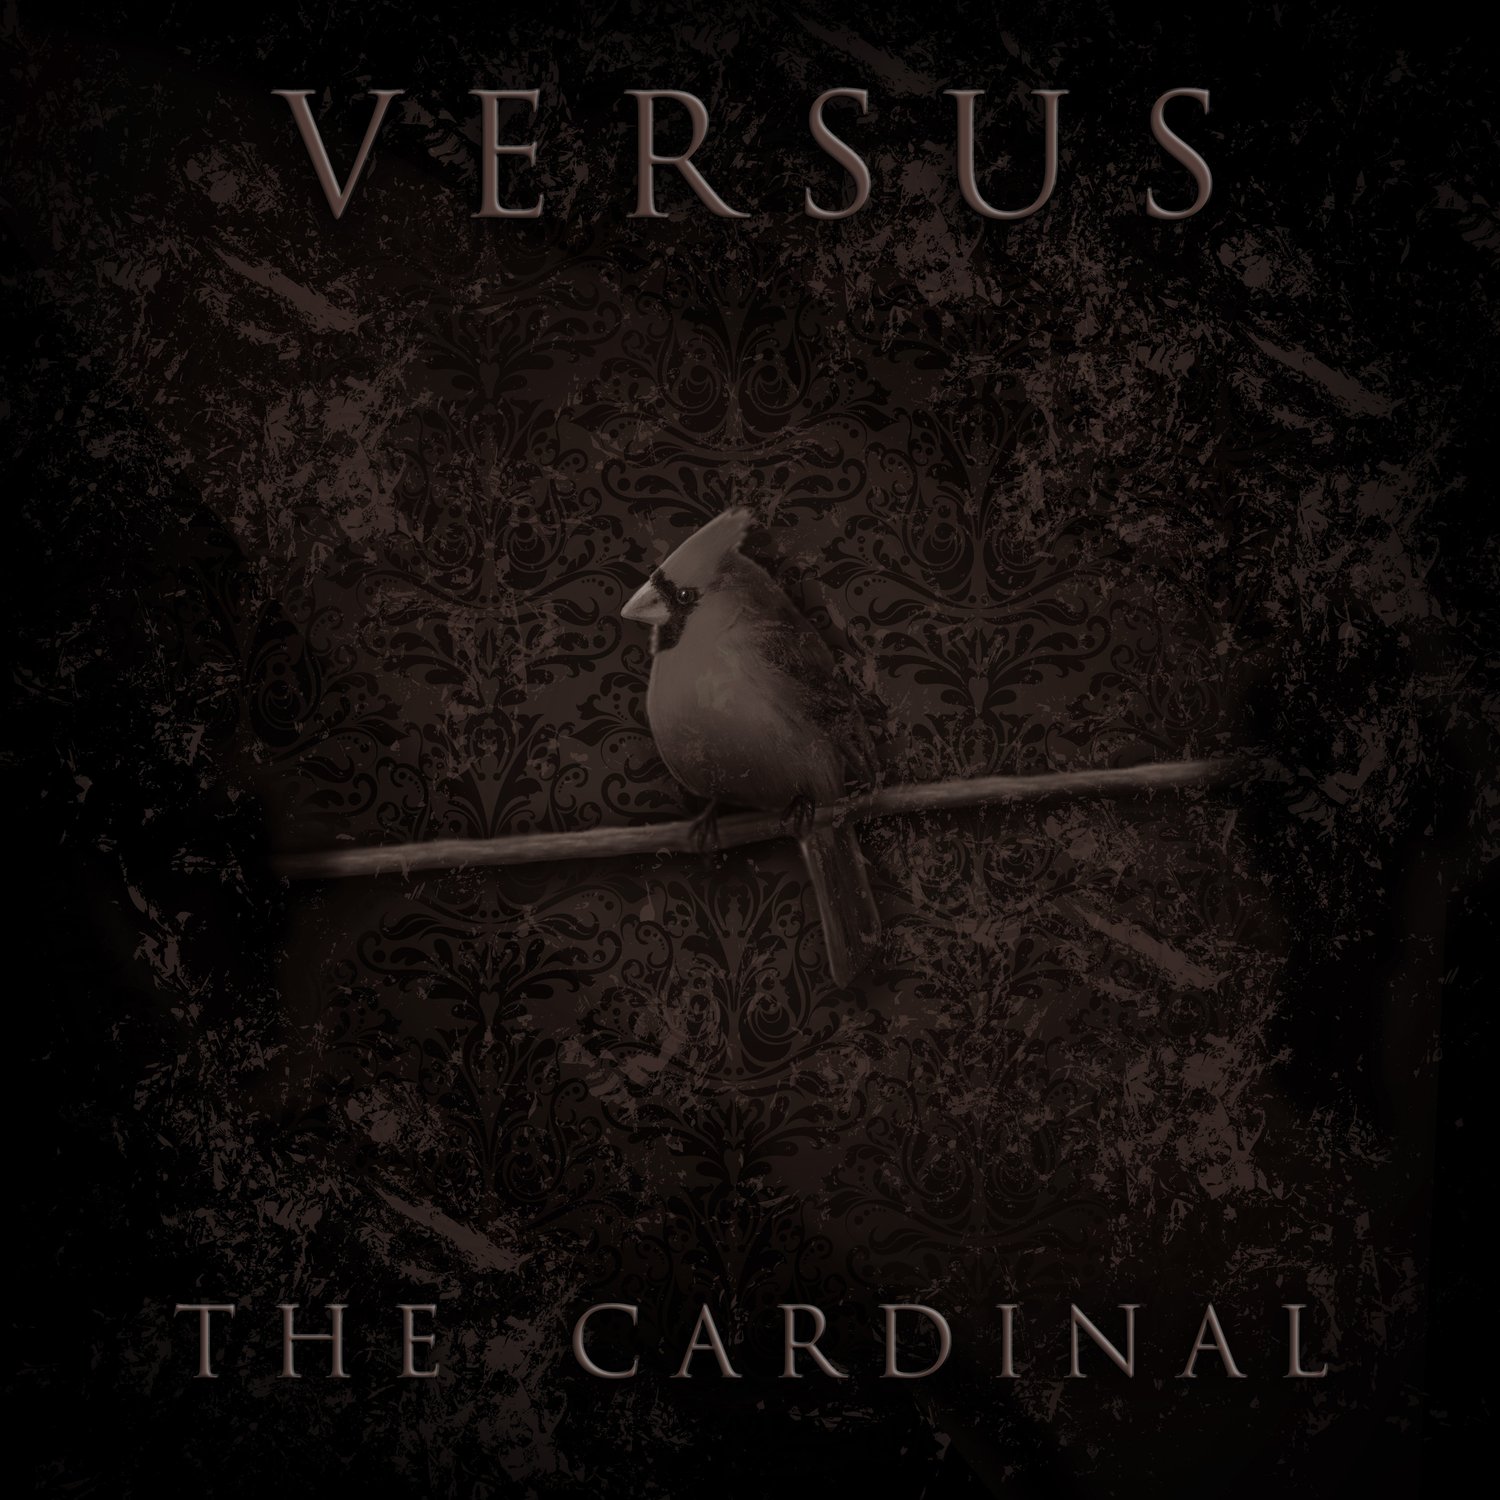 Image of "The Cardinal" Physical CD